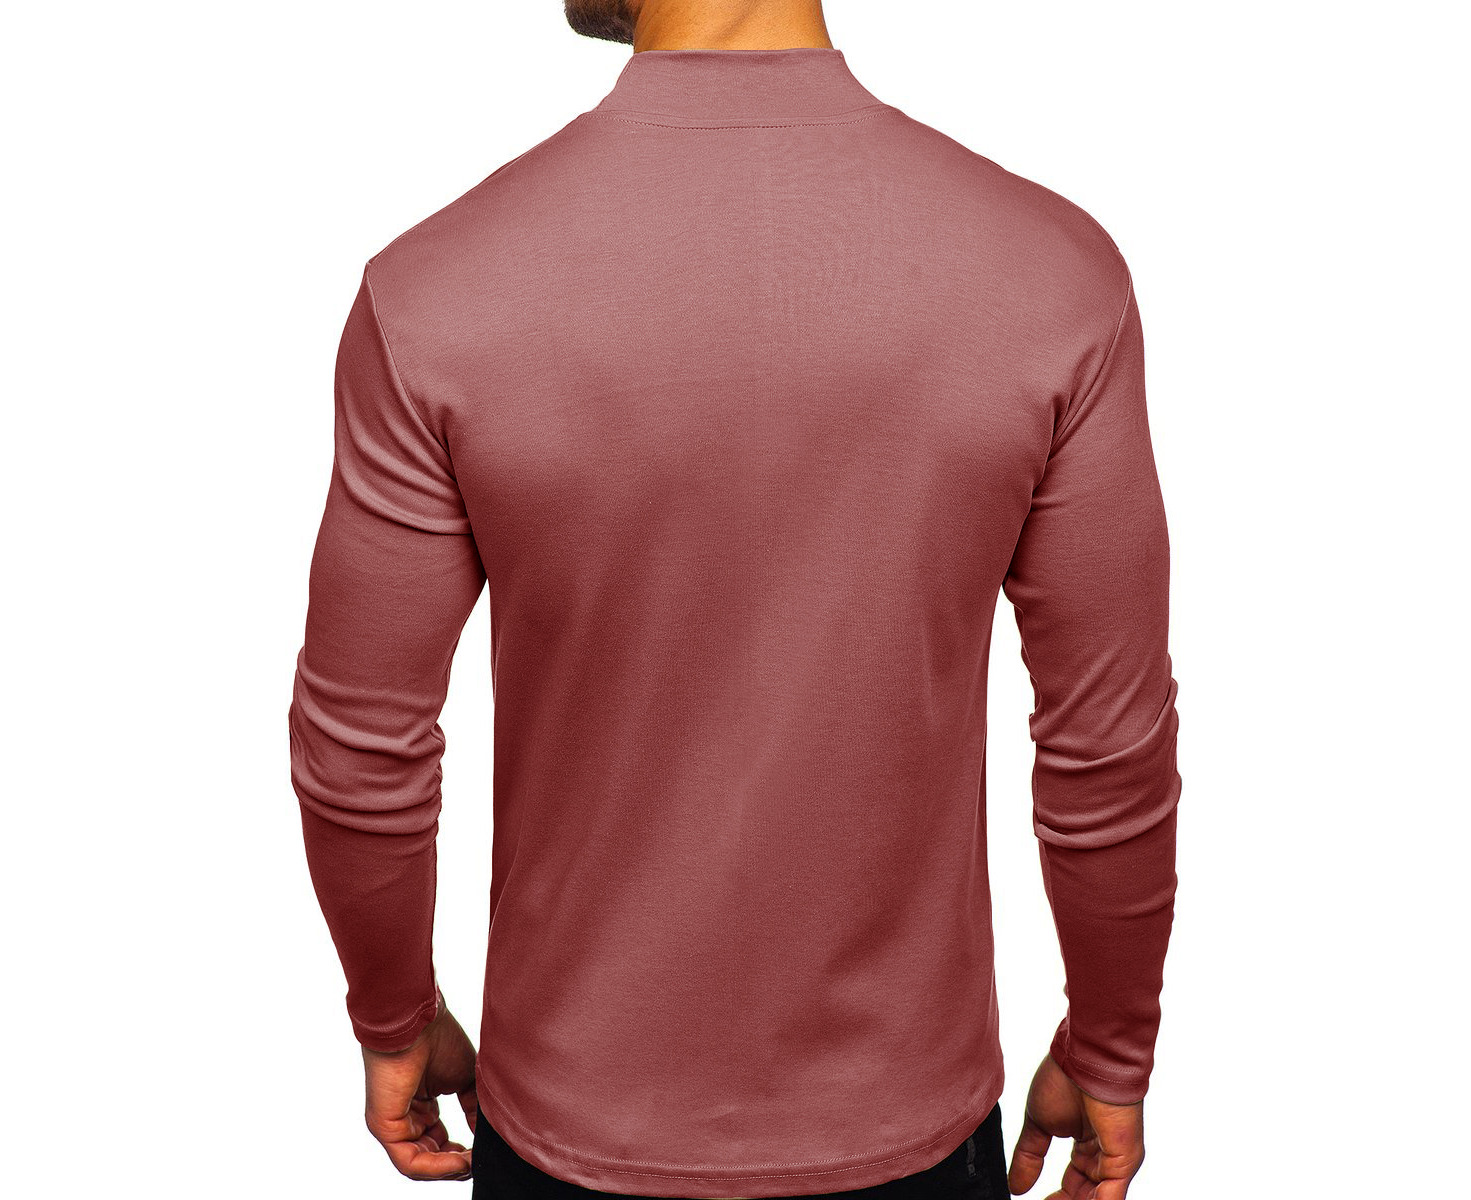 Bonivenshion Men's Compression Shirt Long Sleeve Tops Workout Shirt  Baselayer Top for Men Undershirts for Men Sports Gym Shirts - Red